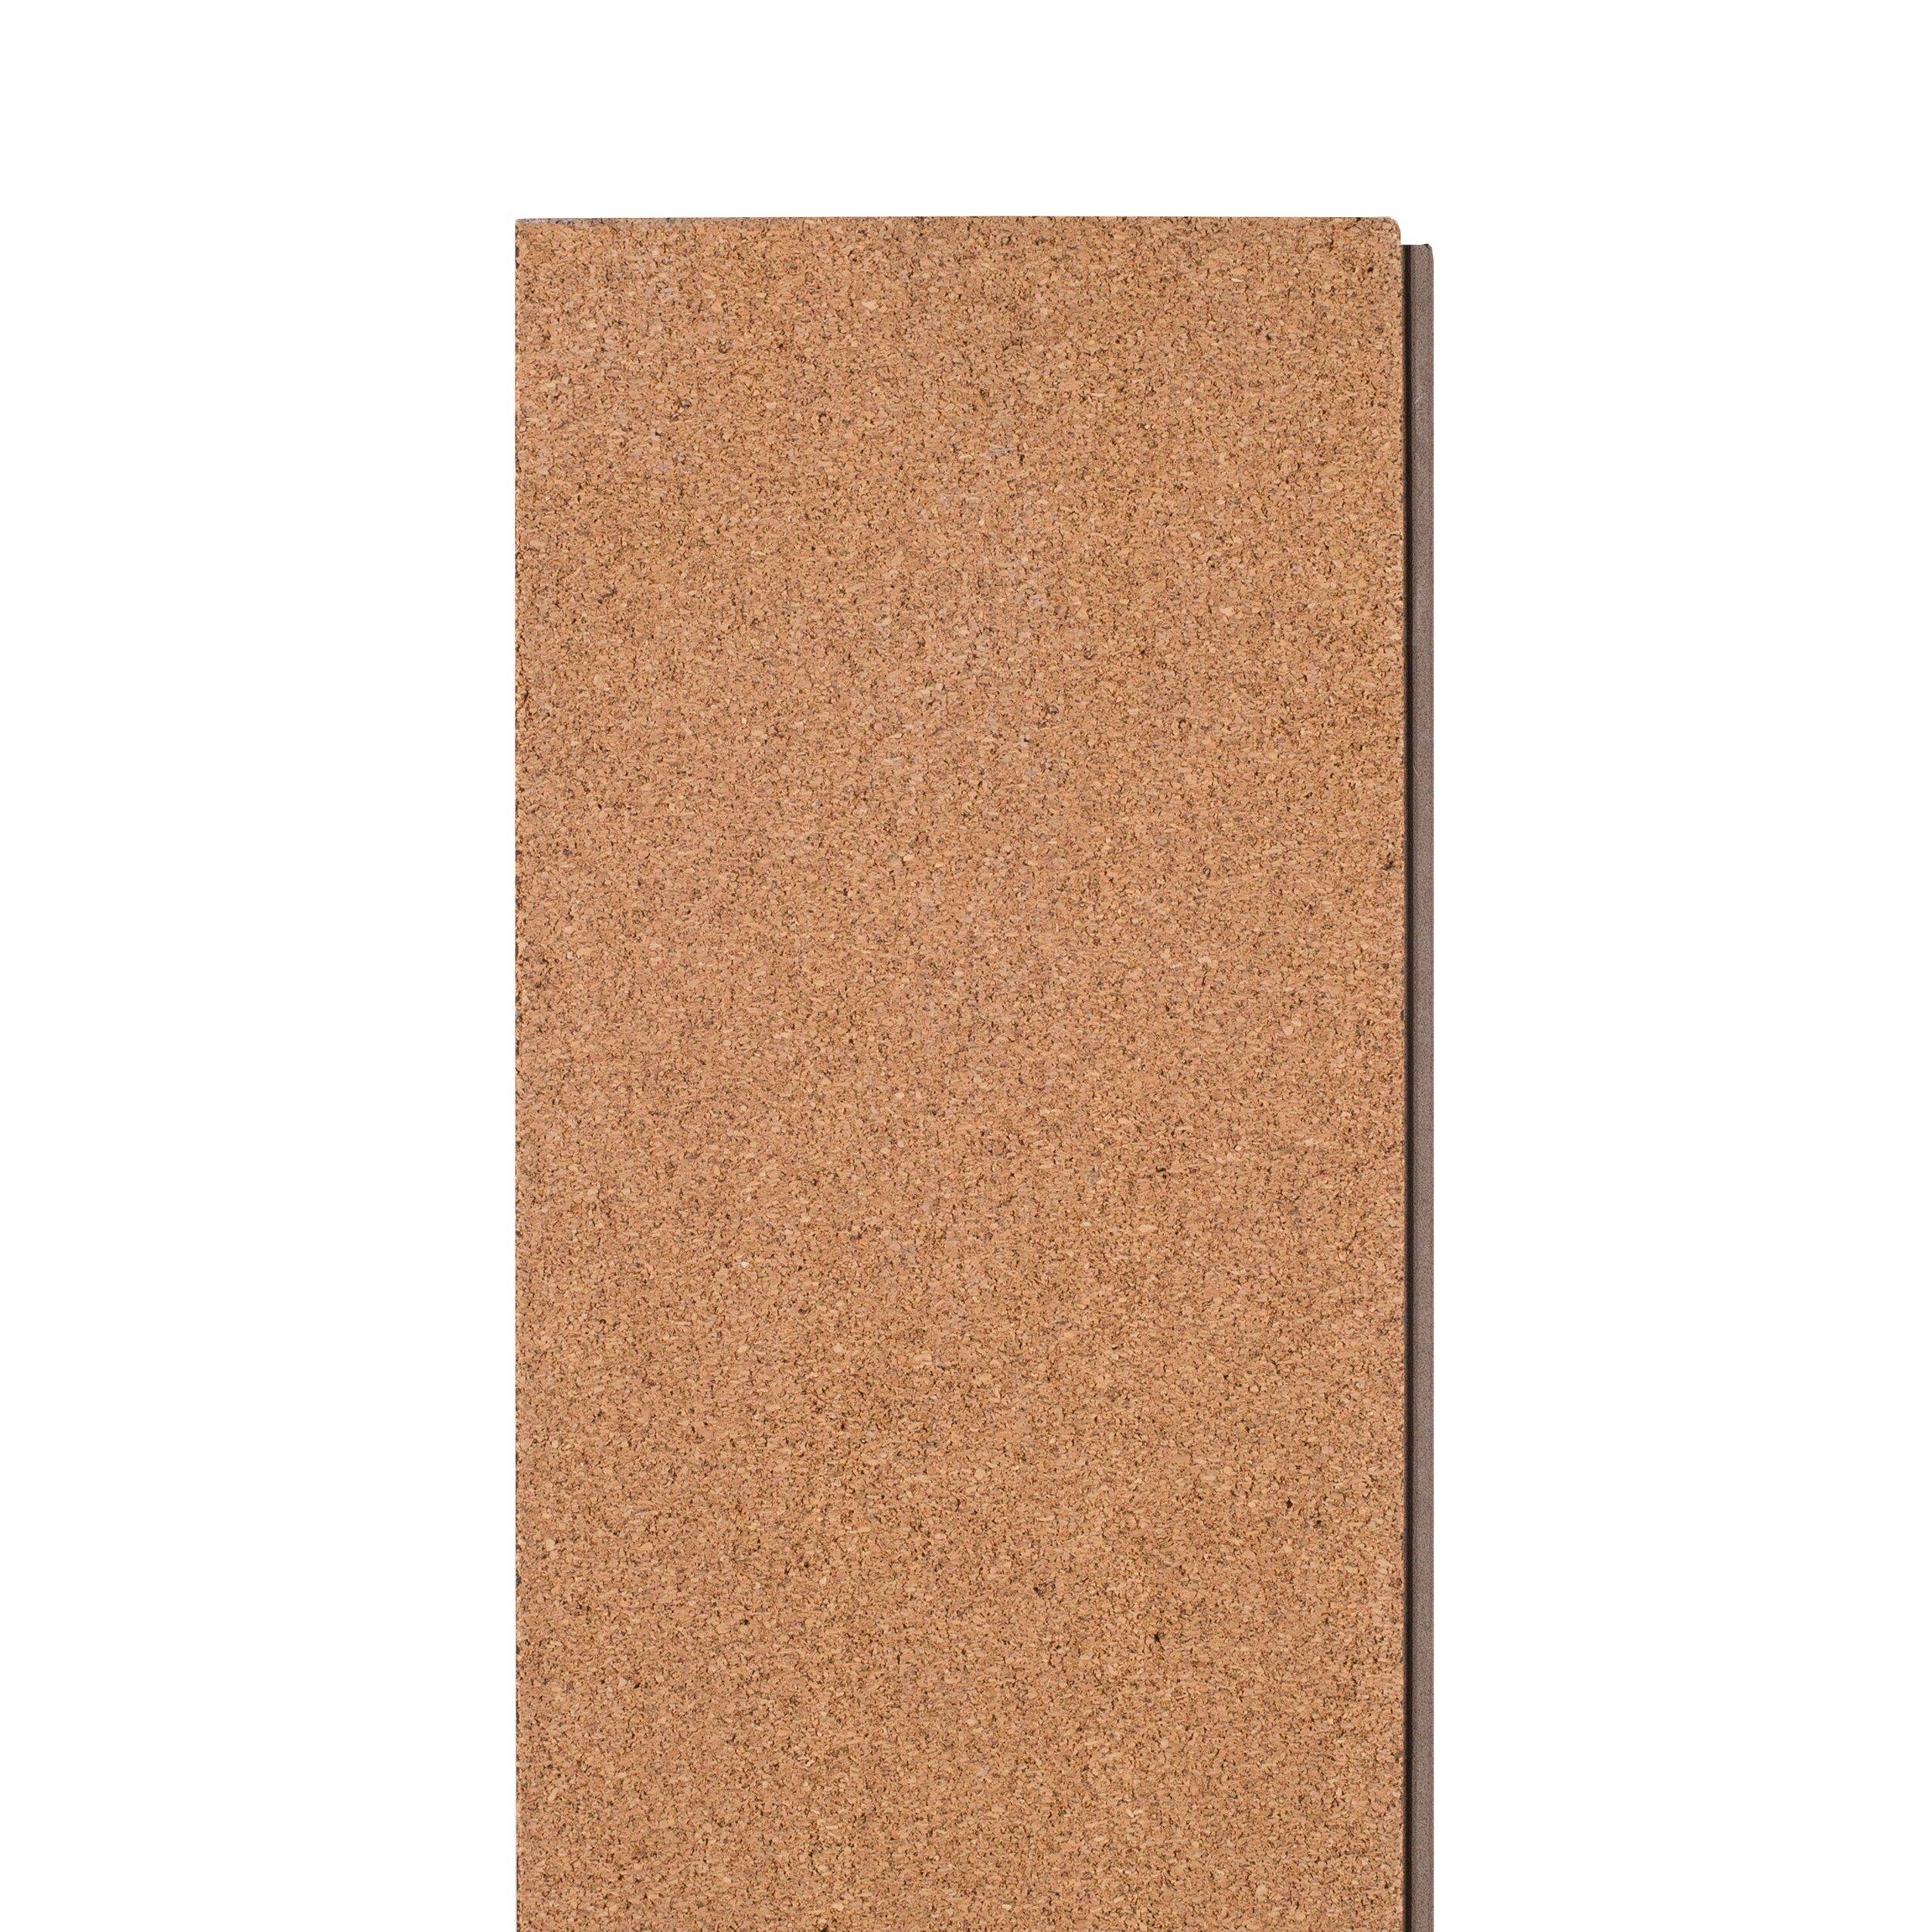 Whistling Hills Rigid Core Luxury Vinyl Plank - Cork Back | Floor